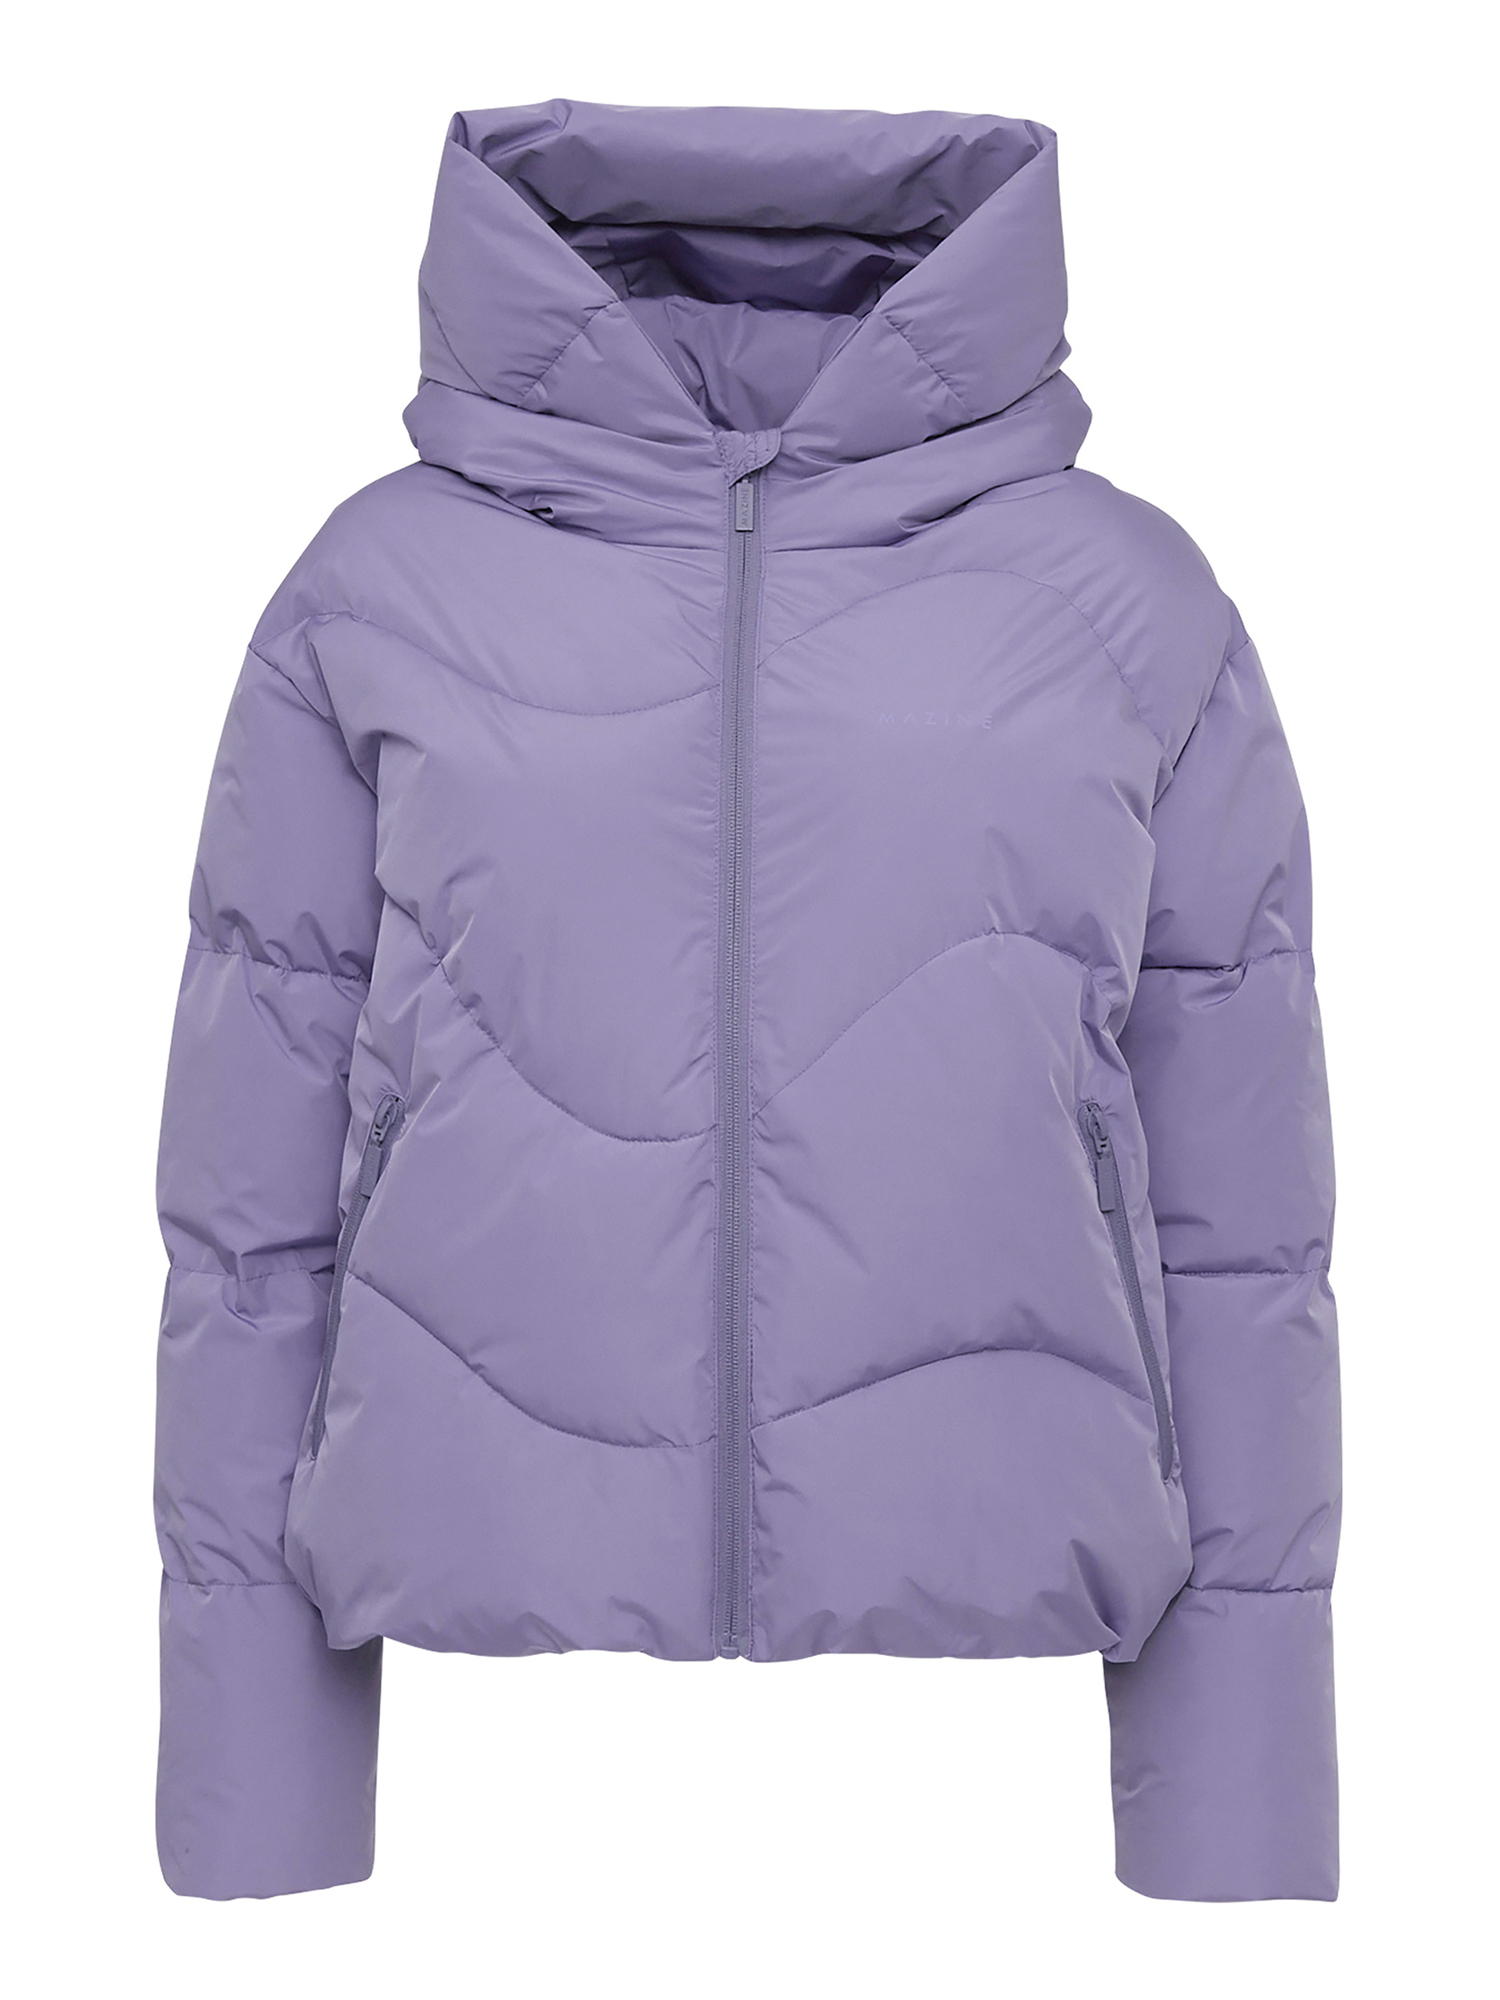 Пуховик MAZINE Dana Puffer Jacket, цвет purple haze толстовка mazine danbury half zip цвет purple haze printed